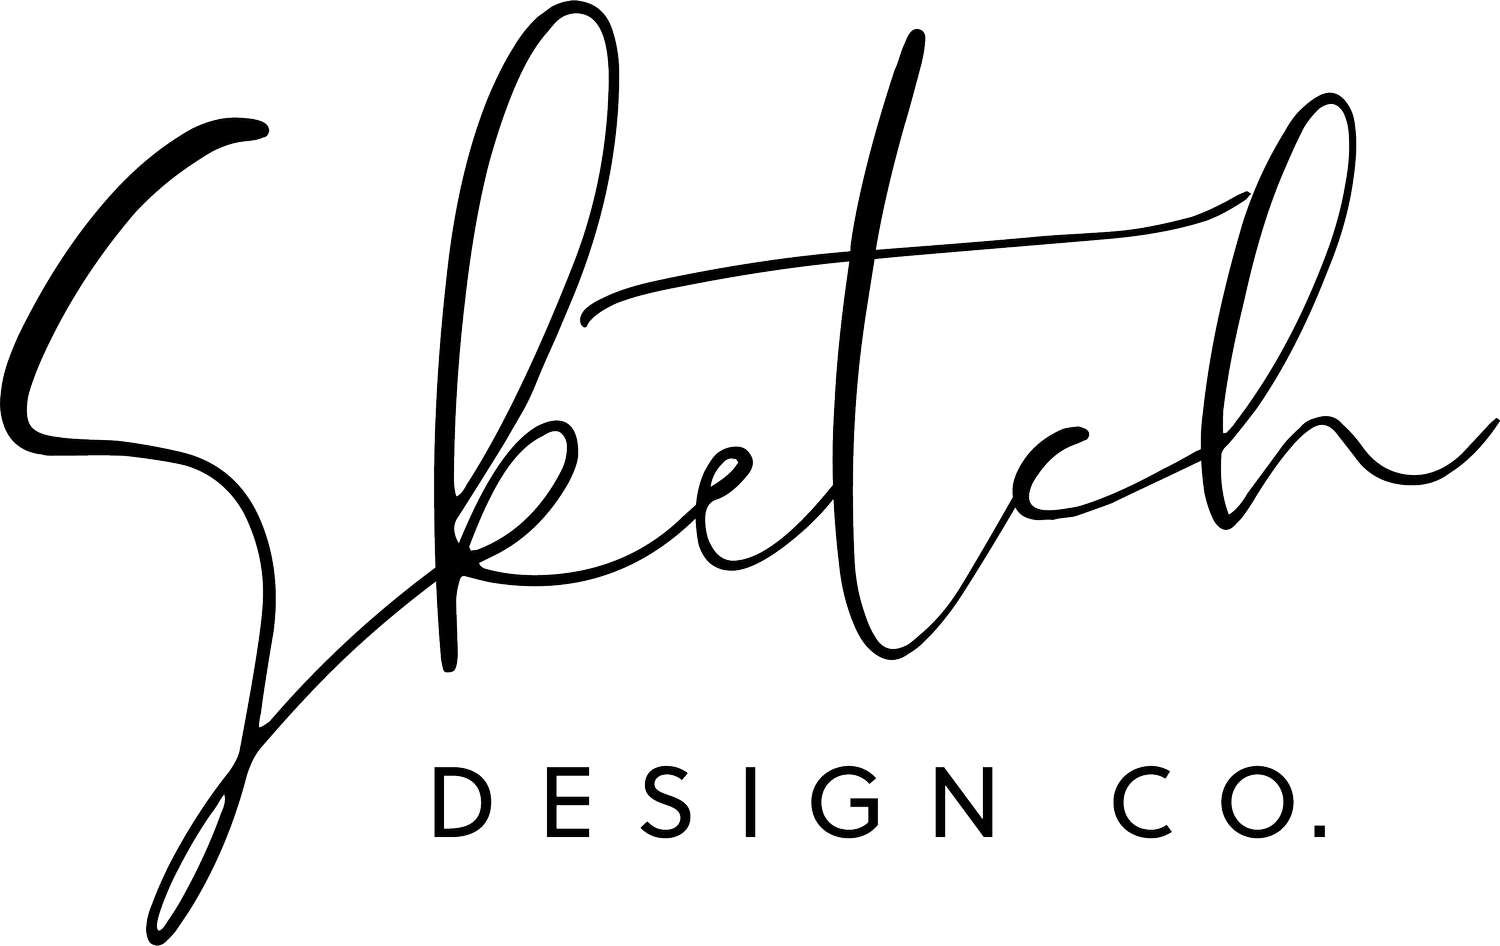 Sketch Design Co.